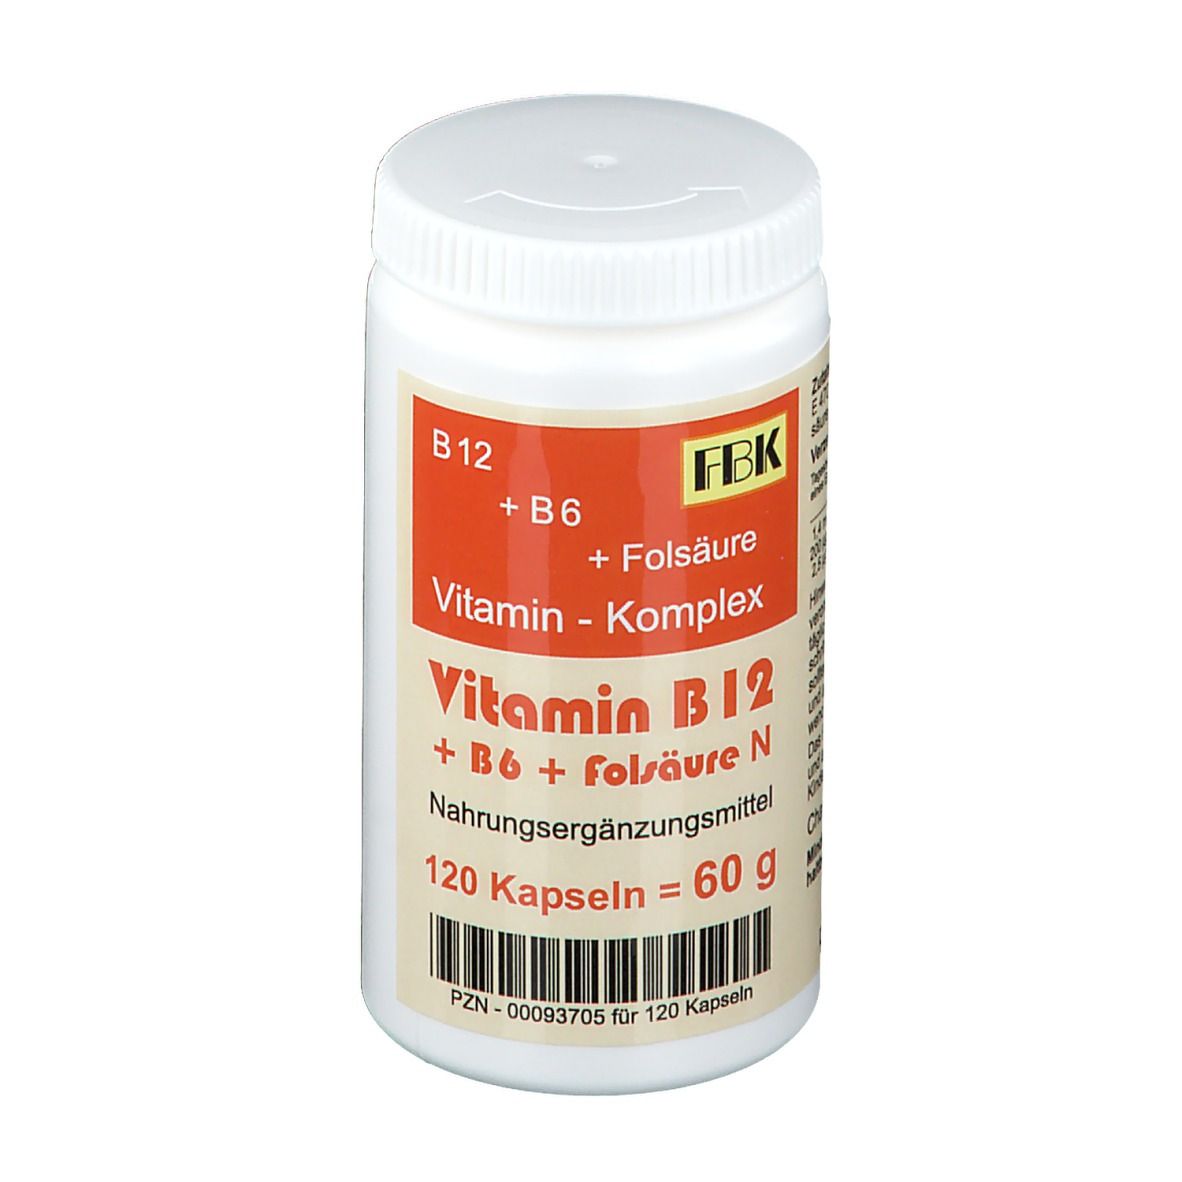 Image of Bioxera® Vitamin B12 + B6 + Folsäure N